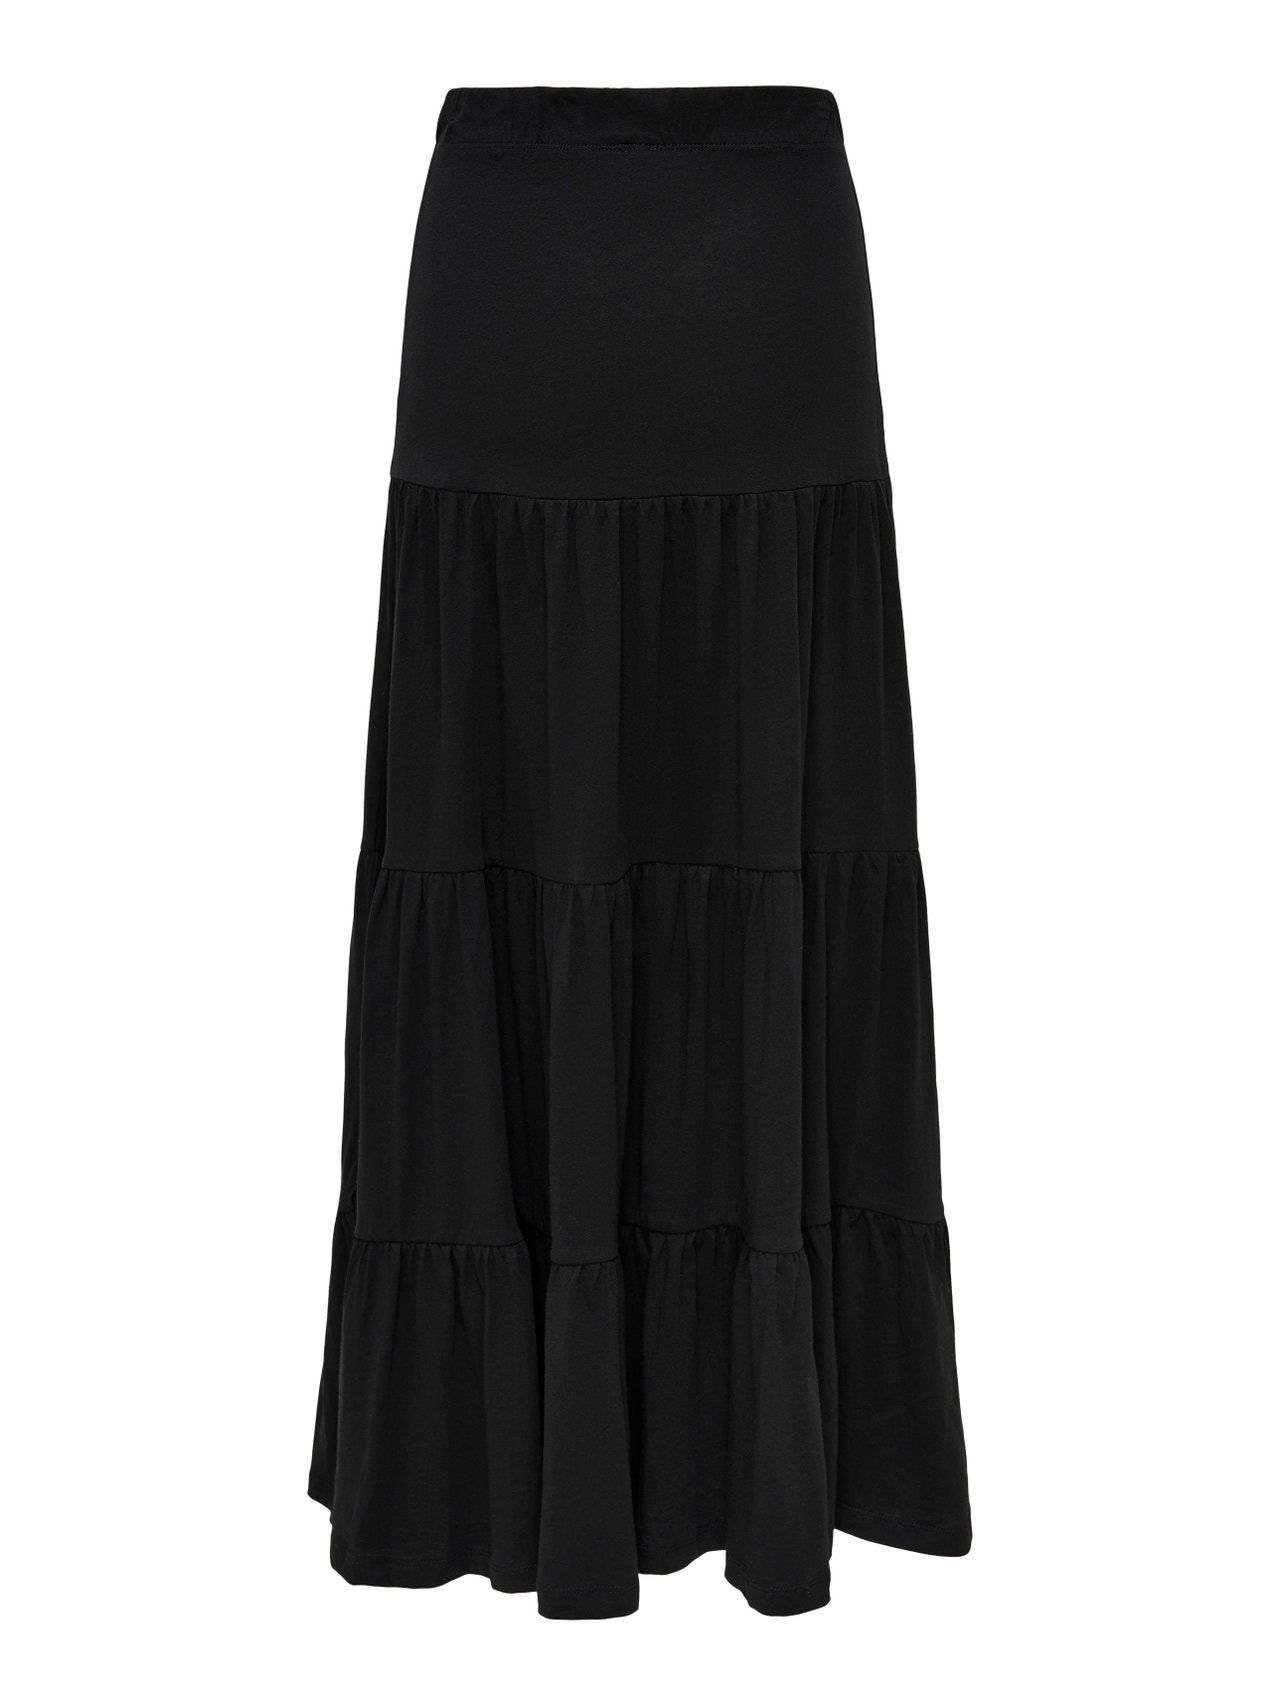 ONLY Frill Maxi skirt -Black - 15226994